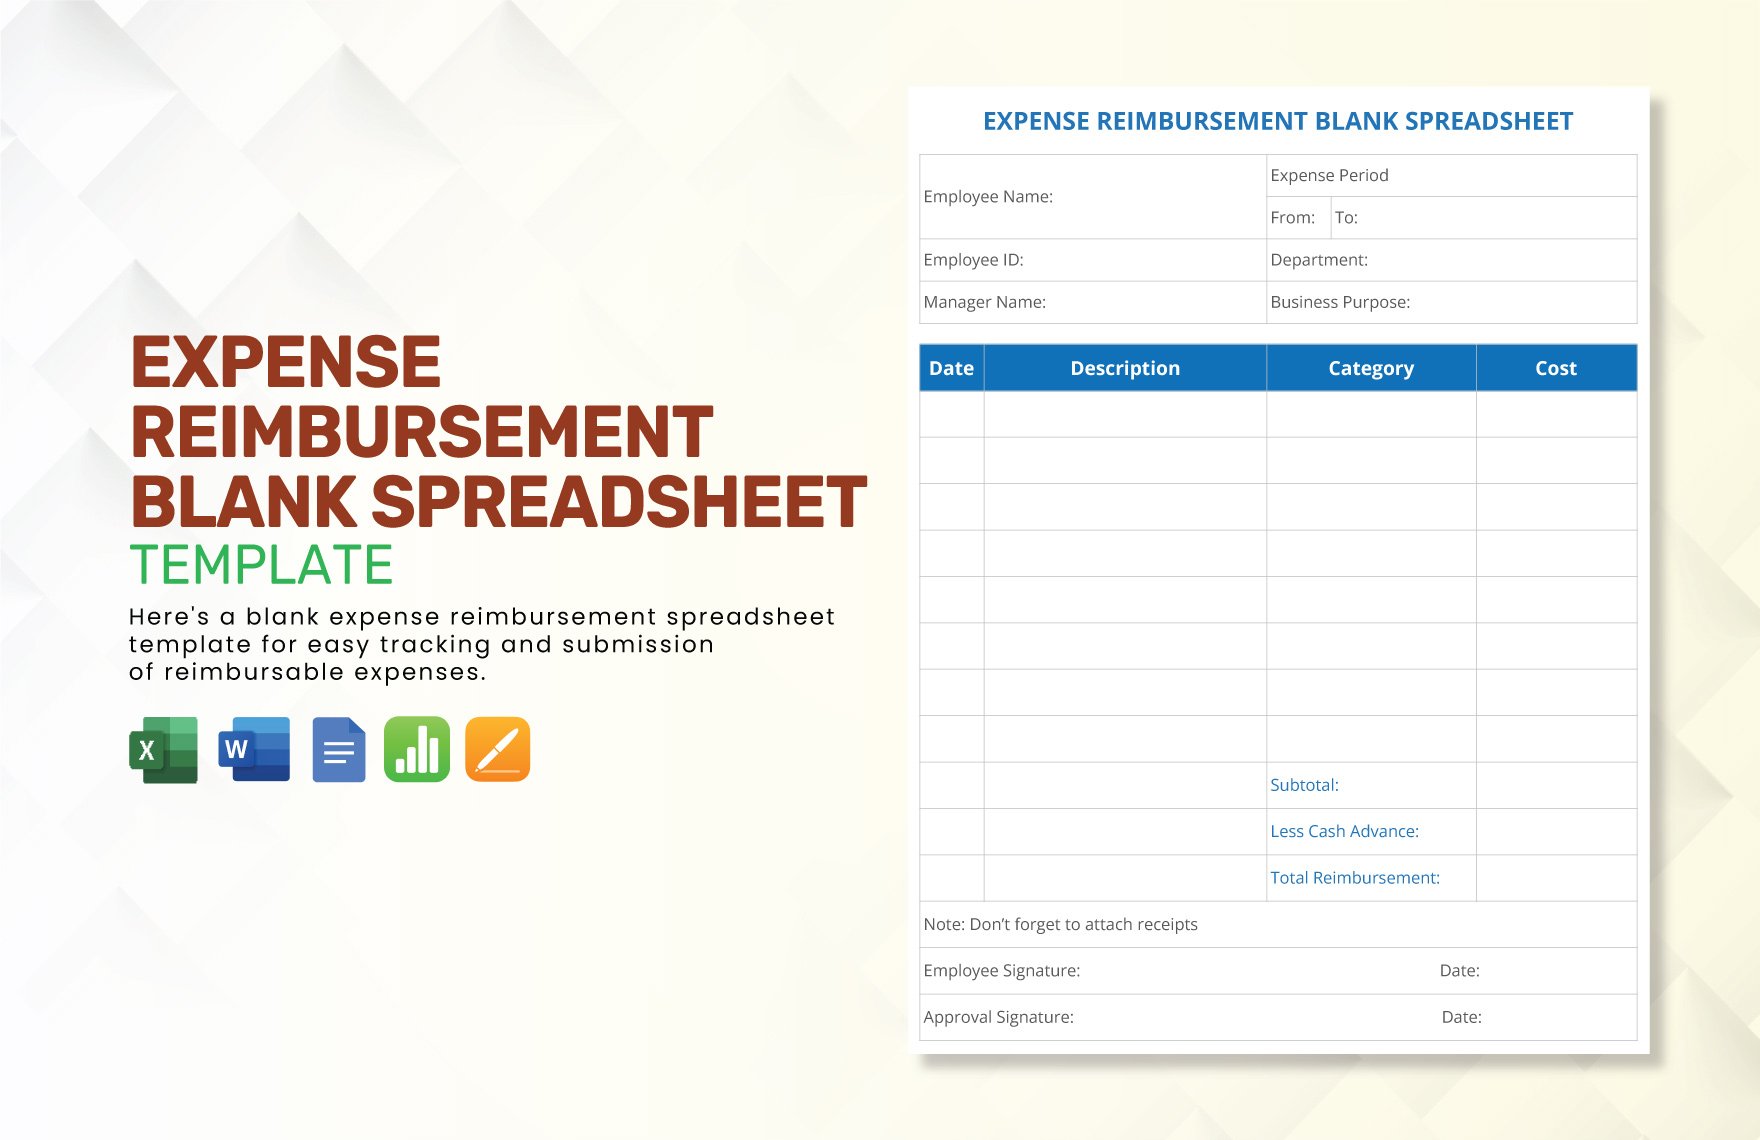 Expense Reimbursement Blank Spreadsheet Template